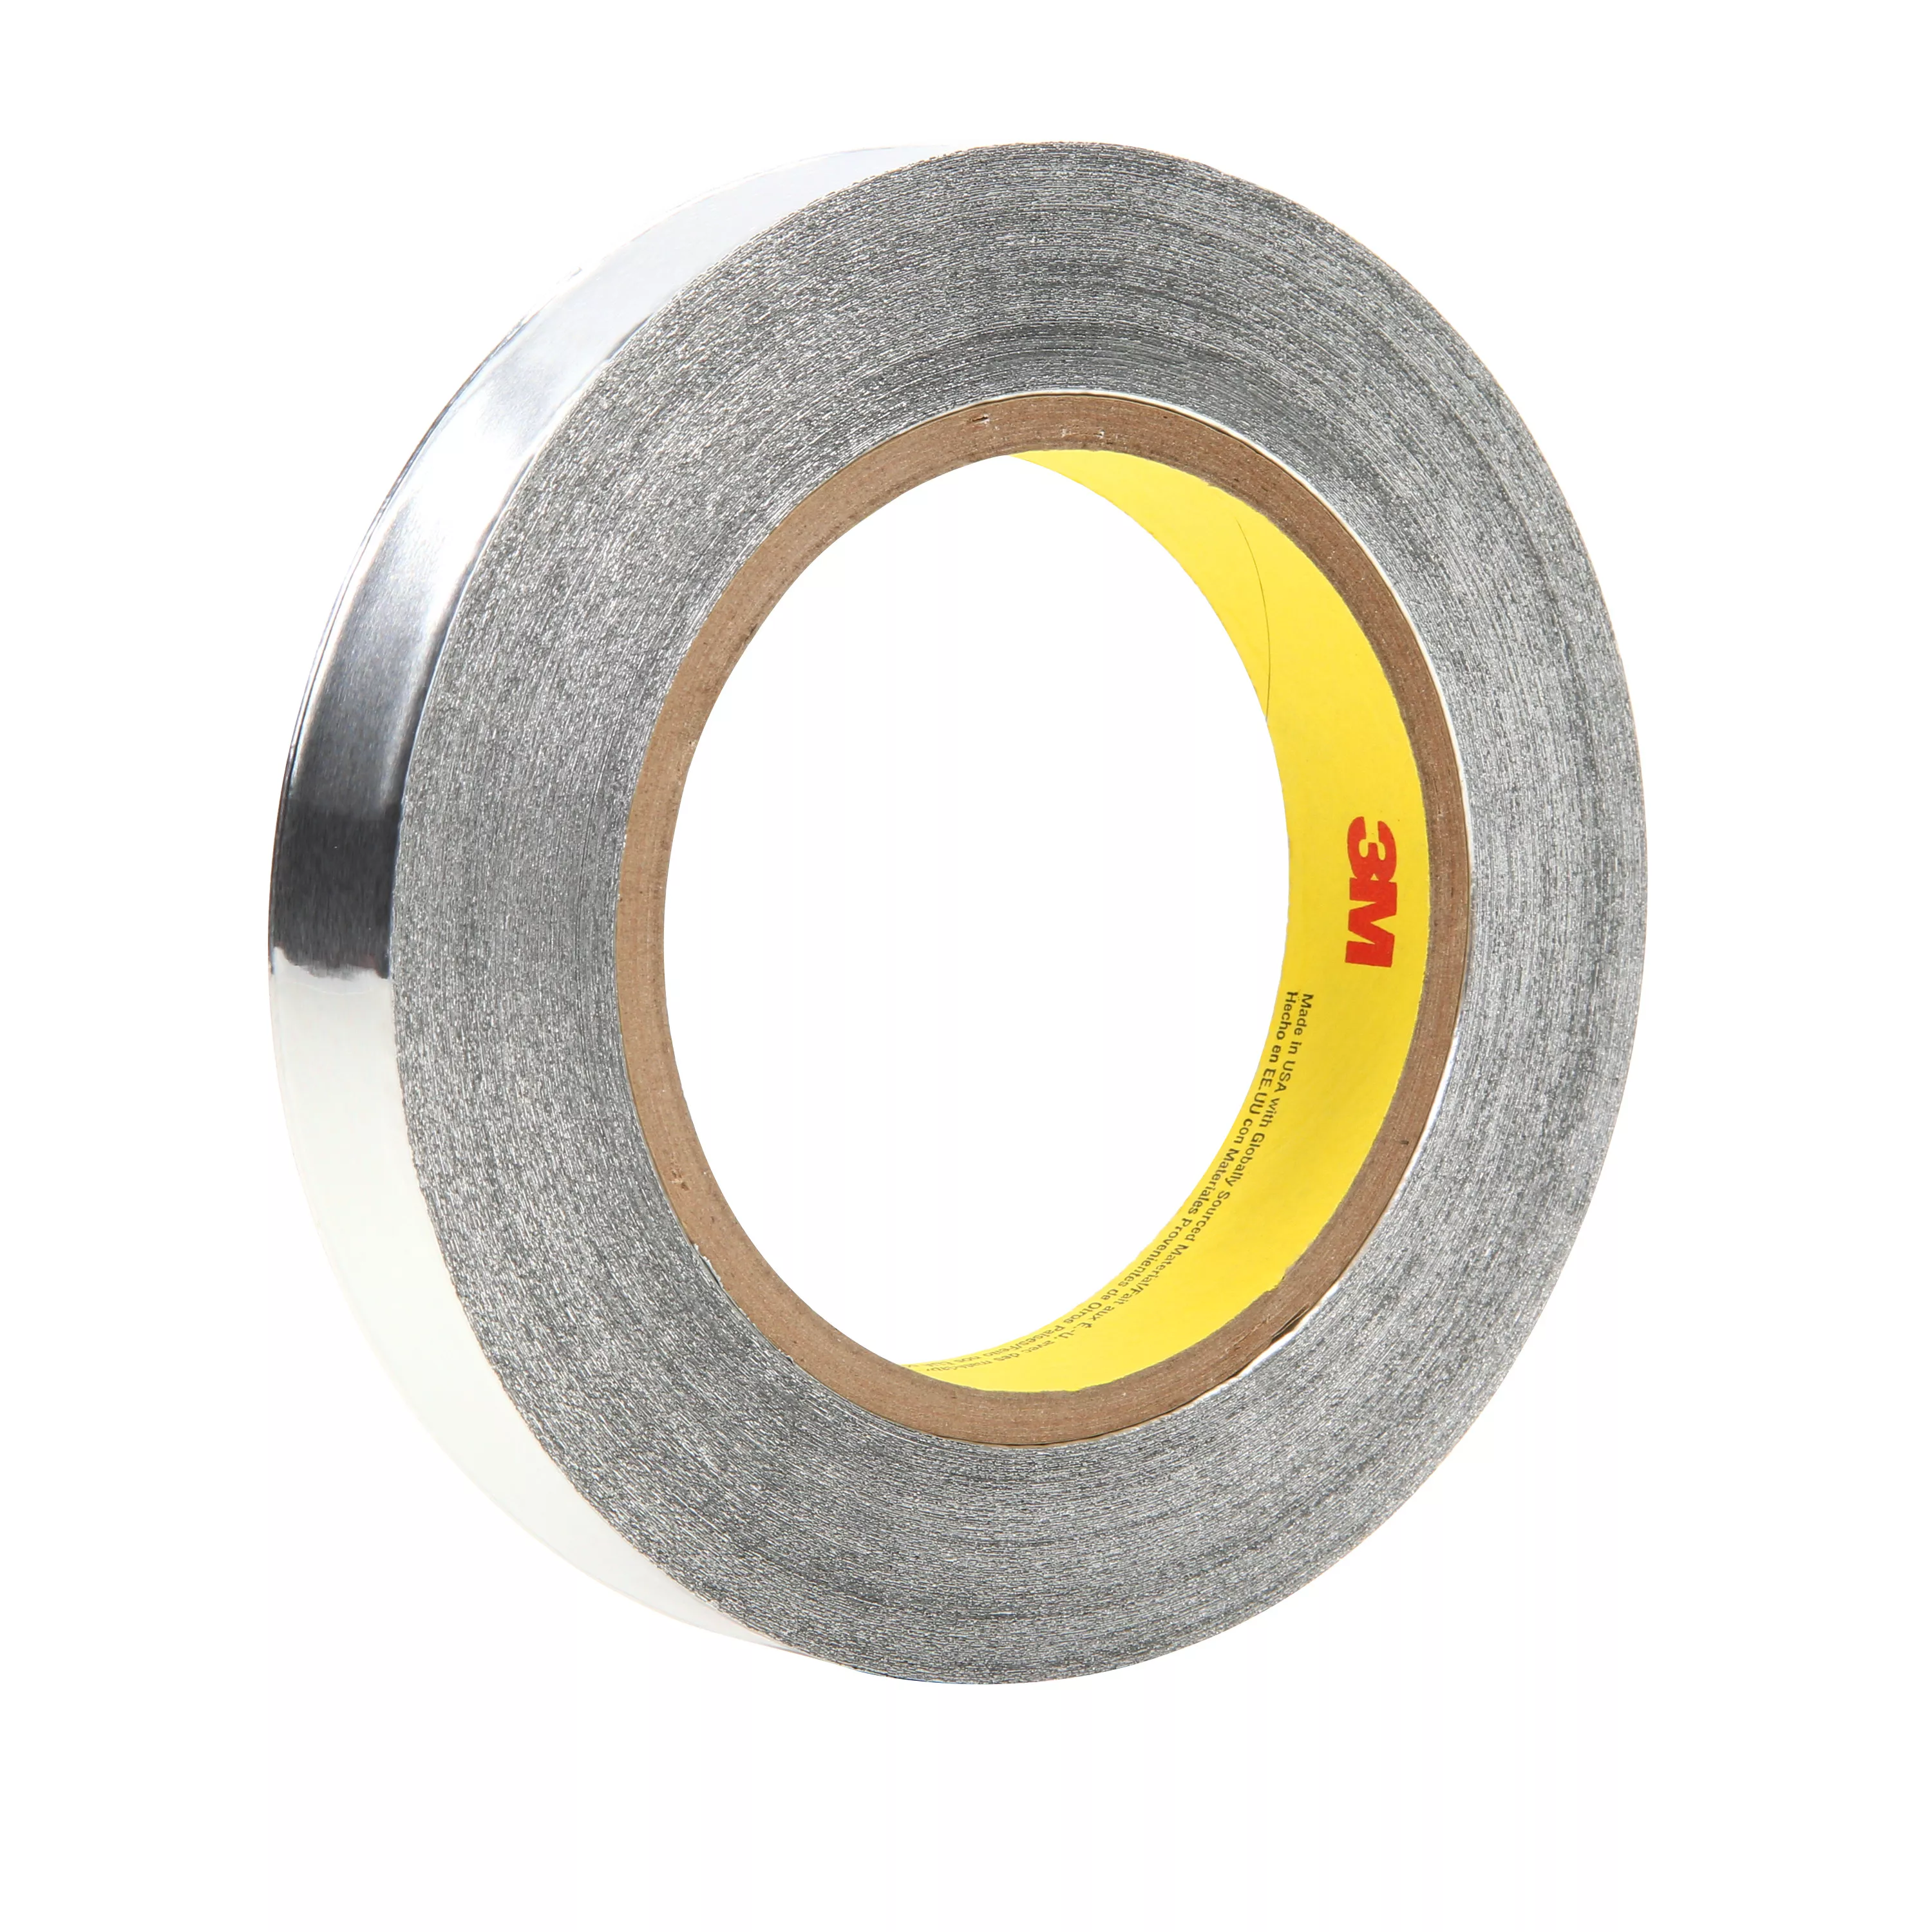 3M™ Aluminum Foil Tape 425, LT80, Silver, 3/4 in x 60 yd, 4.6 mil, 64
Roll/Case